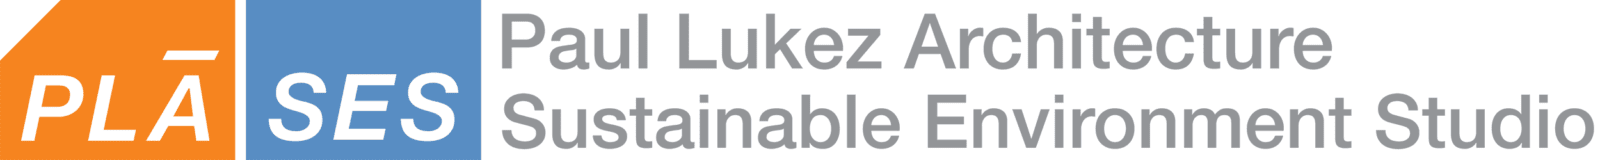 Paul Lukez Architecture Sustainable Environment Studio logo